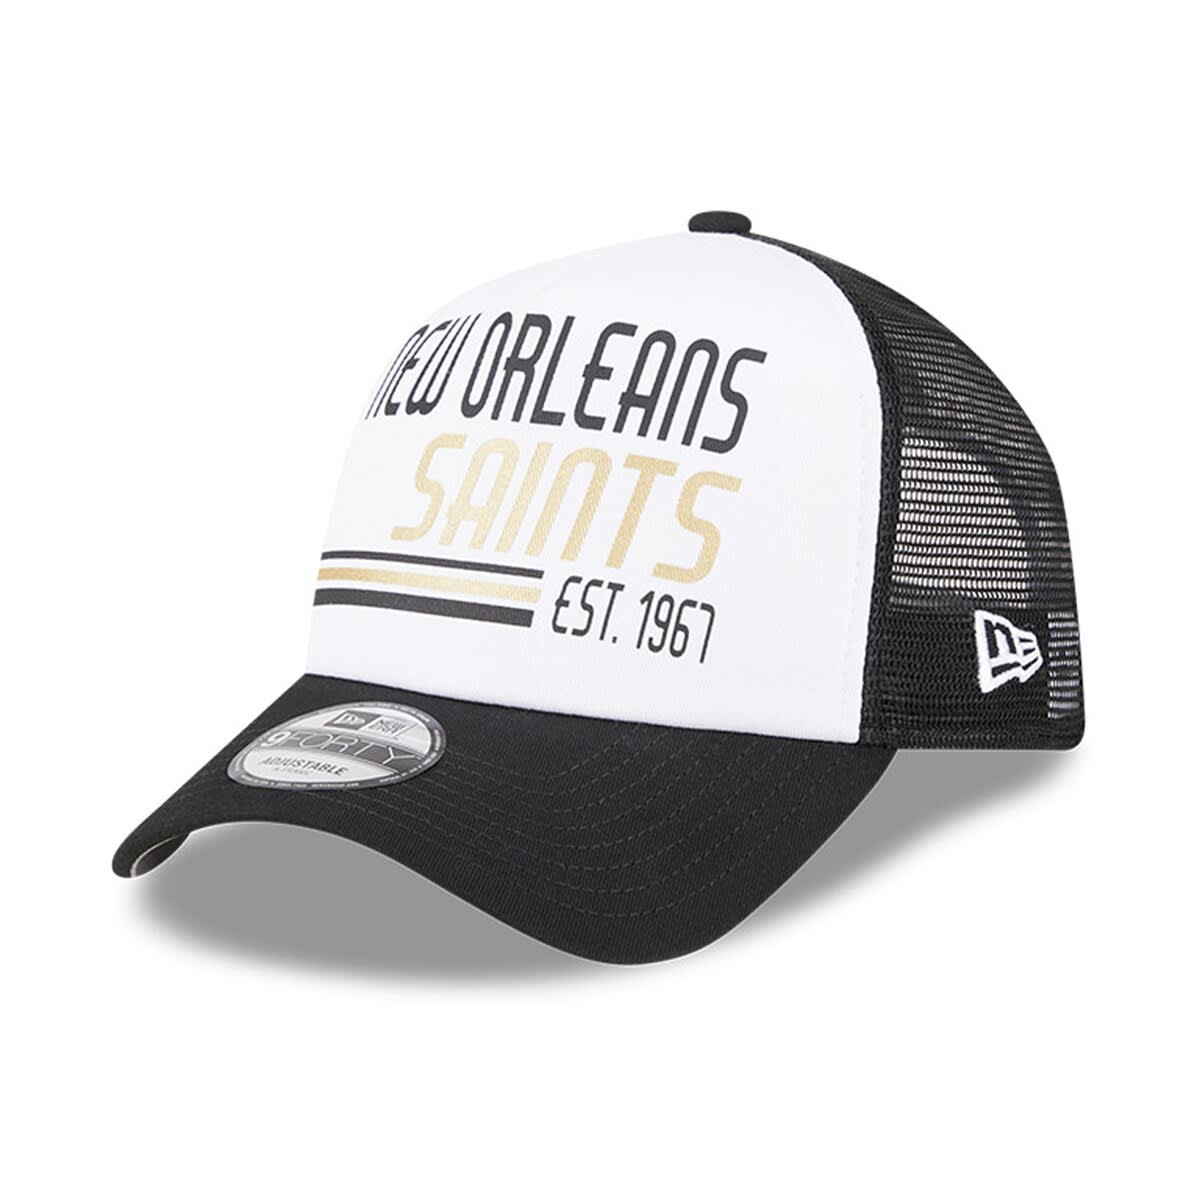 New Orleans Saints sideline gear hat